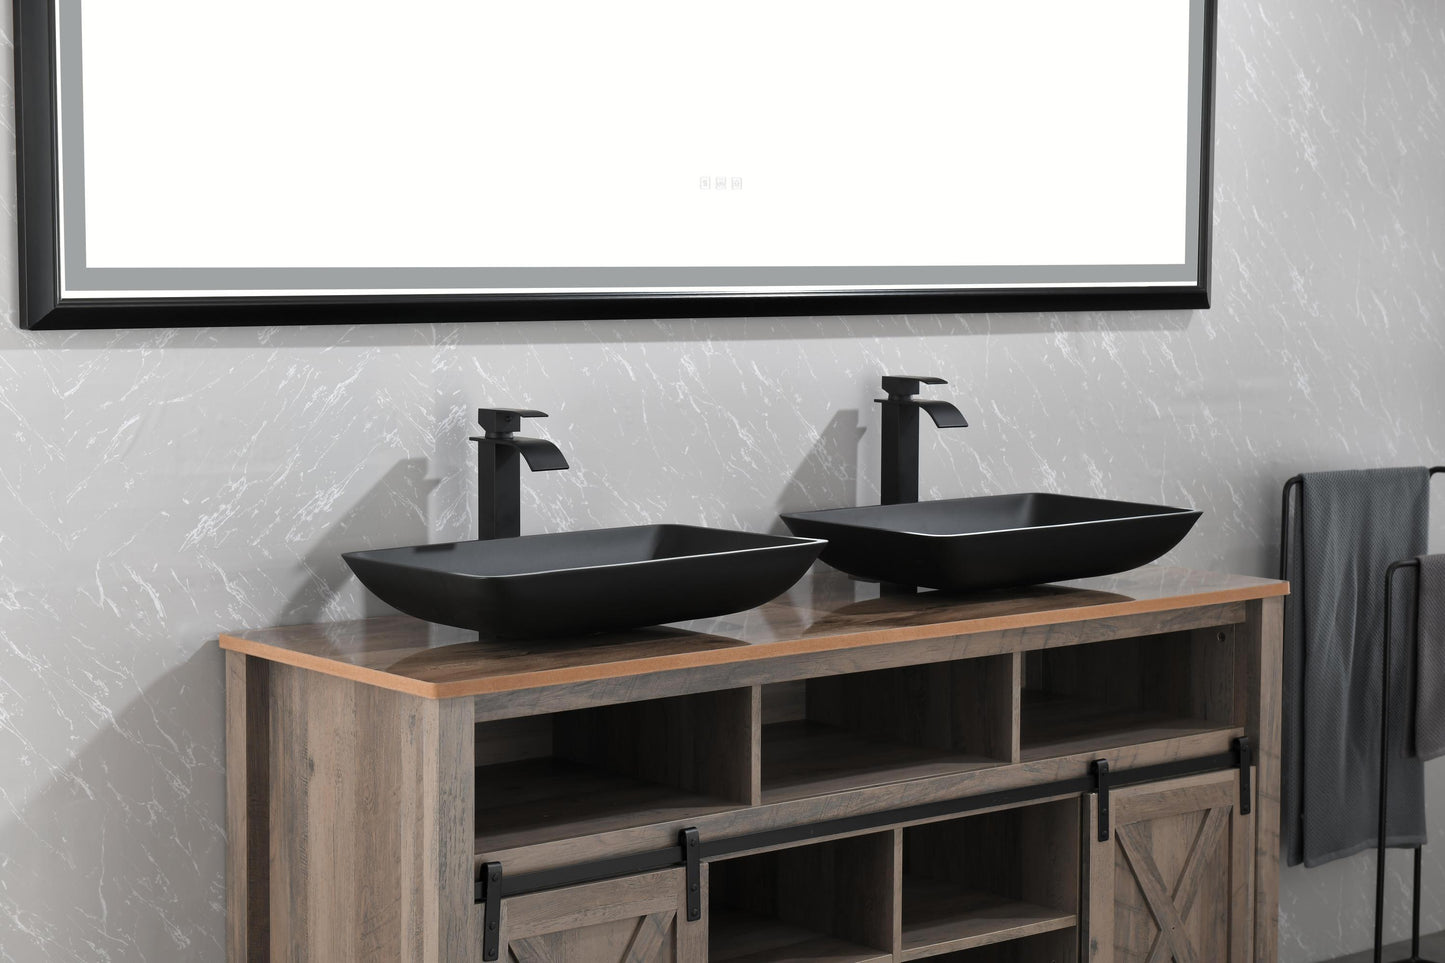 Matte Black Glass Rectangular Vessel Bathroom Sink Set with Faucet and Pop-Up Drain